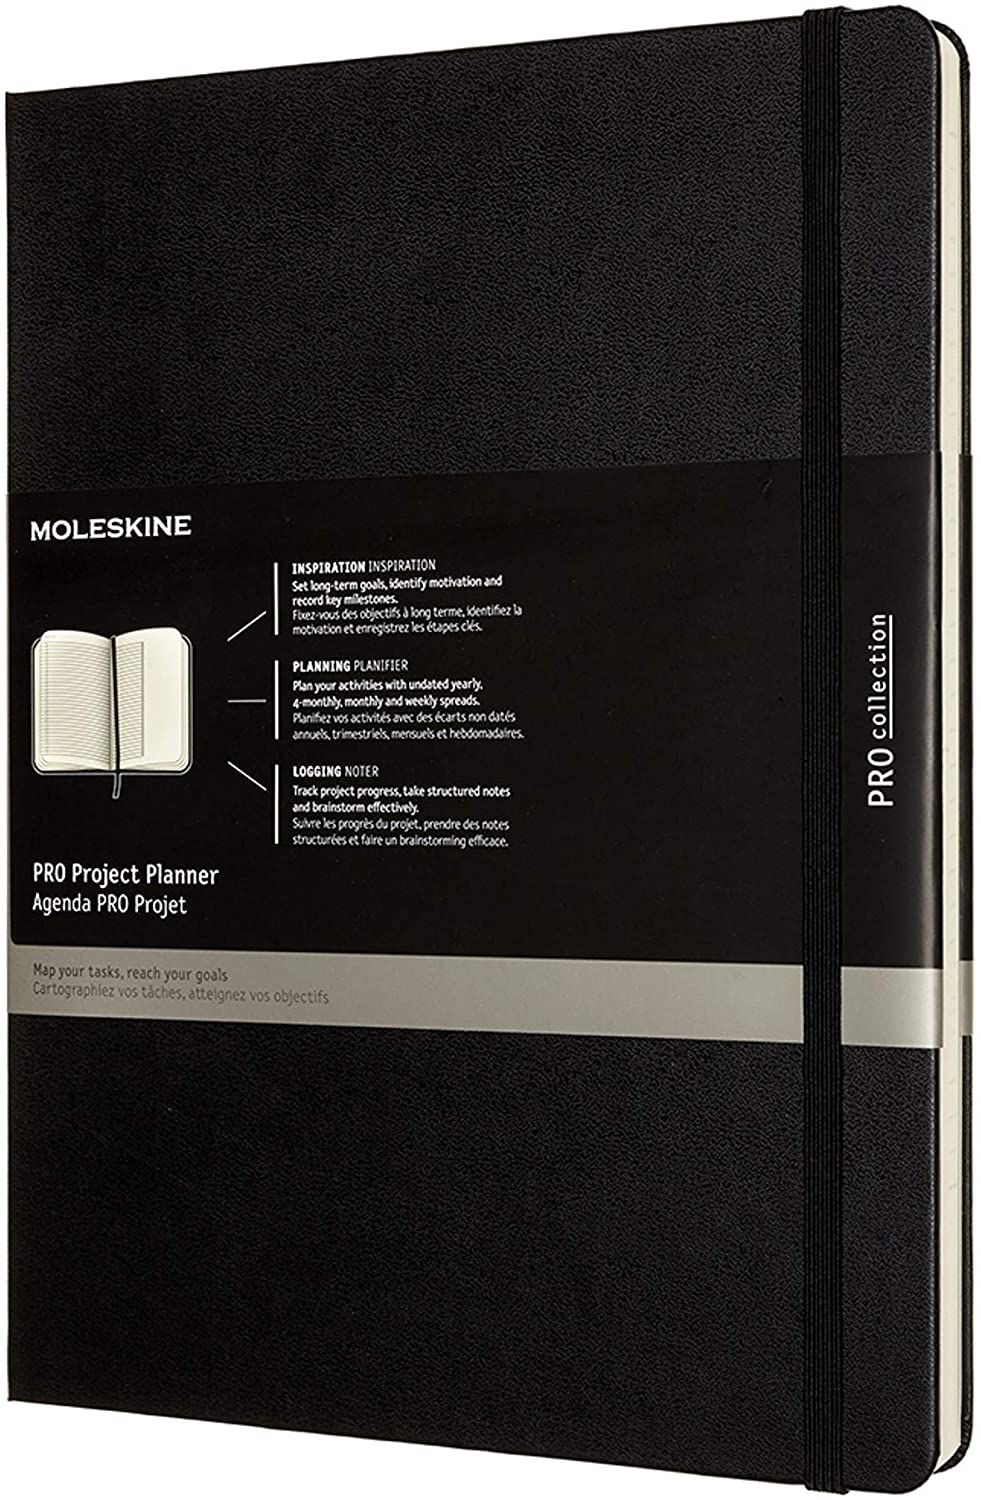 Agenda - Moleskine - Pro Project Planner - Black, X-Large, Hardcover | Moleskine